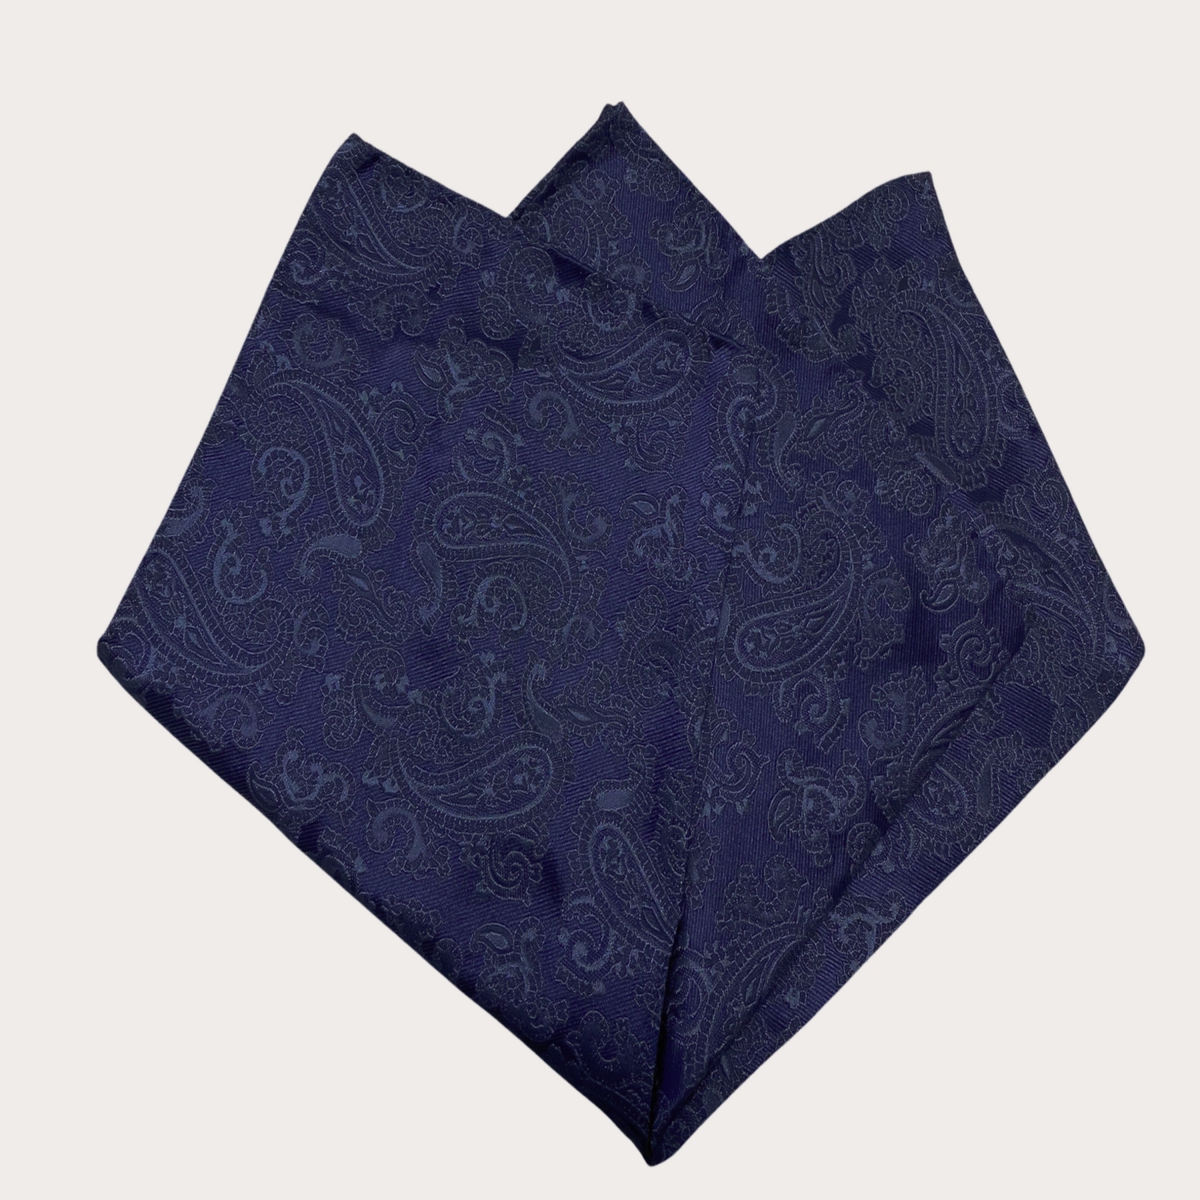 BRUCLE Einstecktuch aus Jacquard-Seide, marineblaues Paisley-Muster